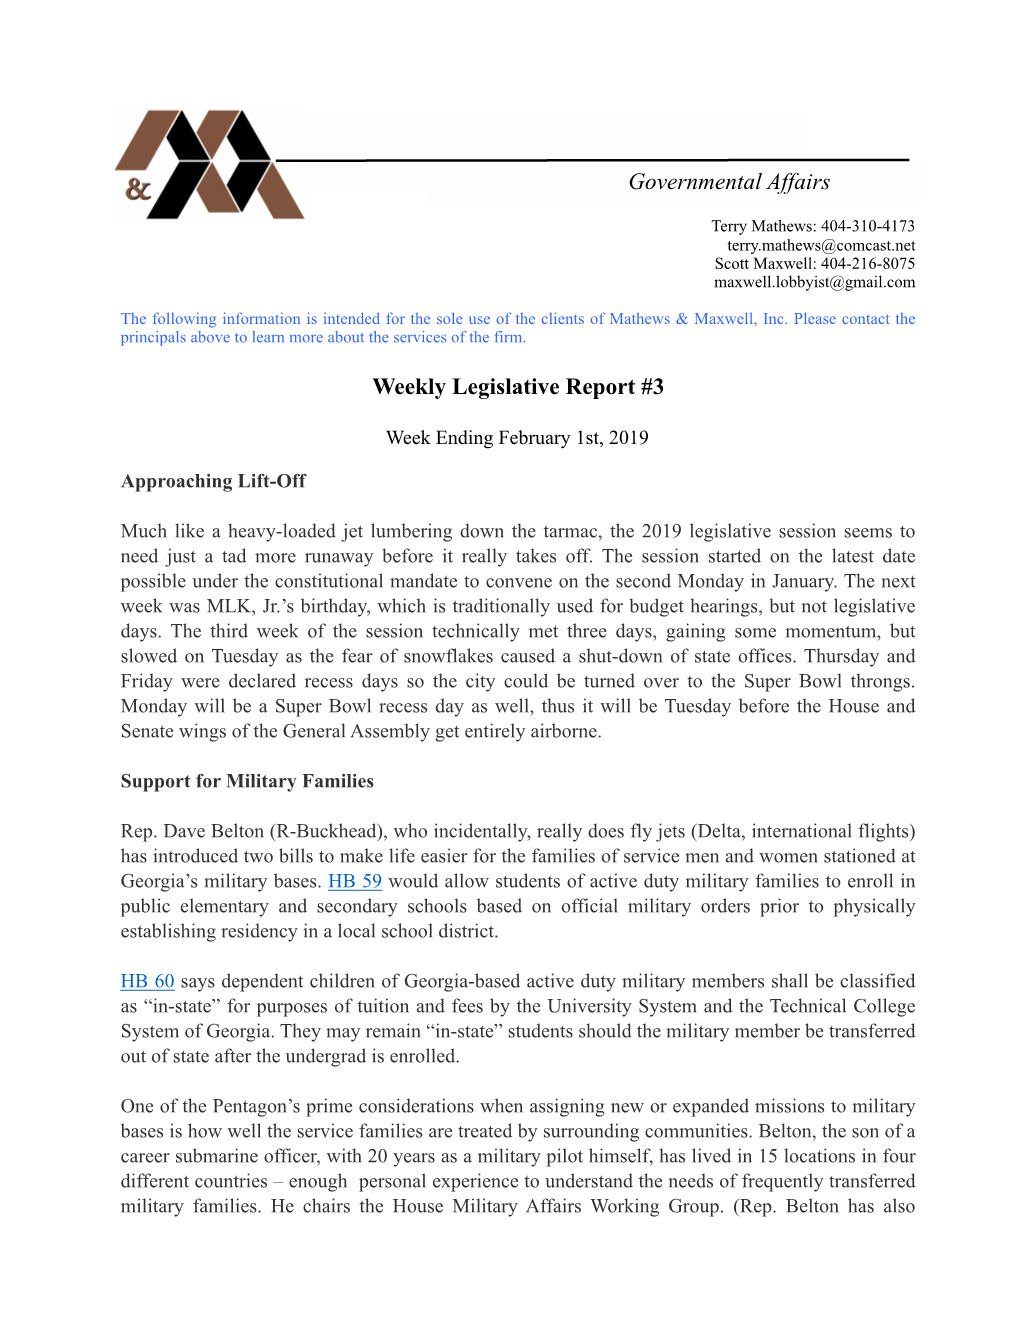 Weekly Legislative Report #3 02-1-19